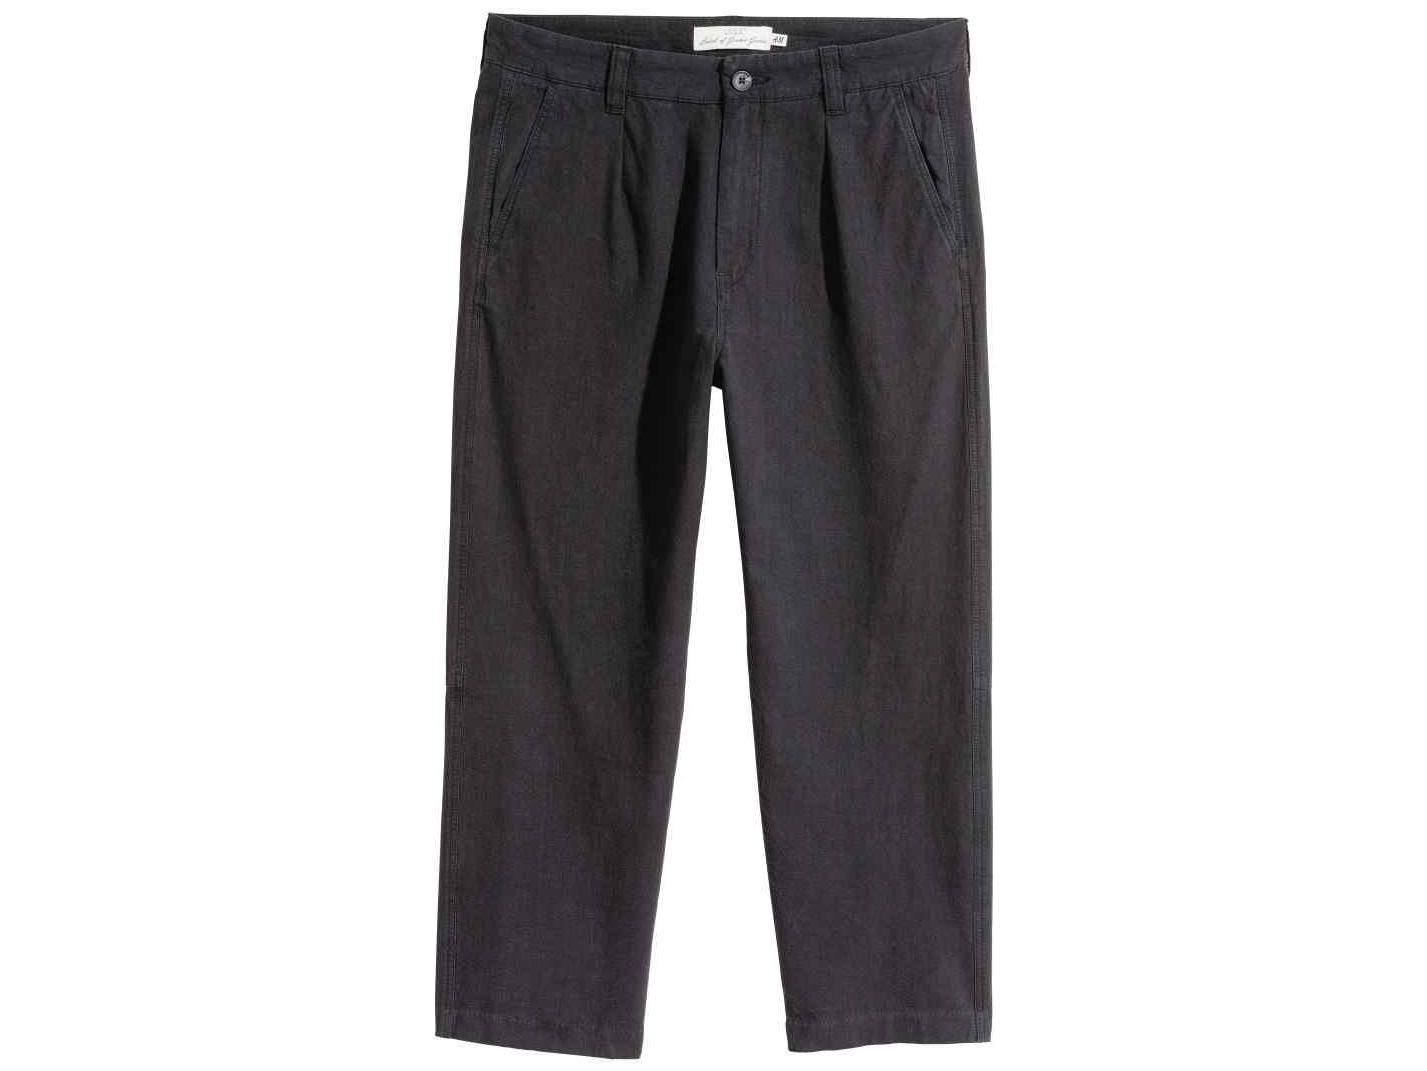 Wide Linen Blend Trousers, £24.99, H&amp;M